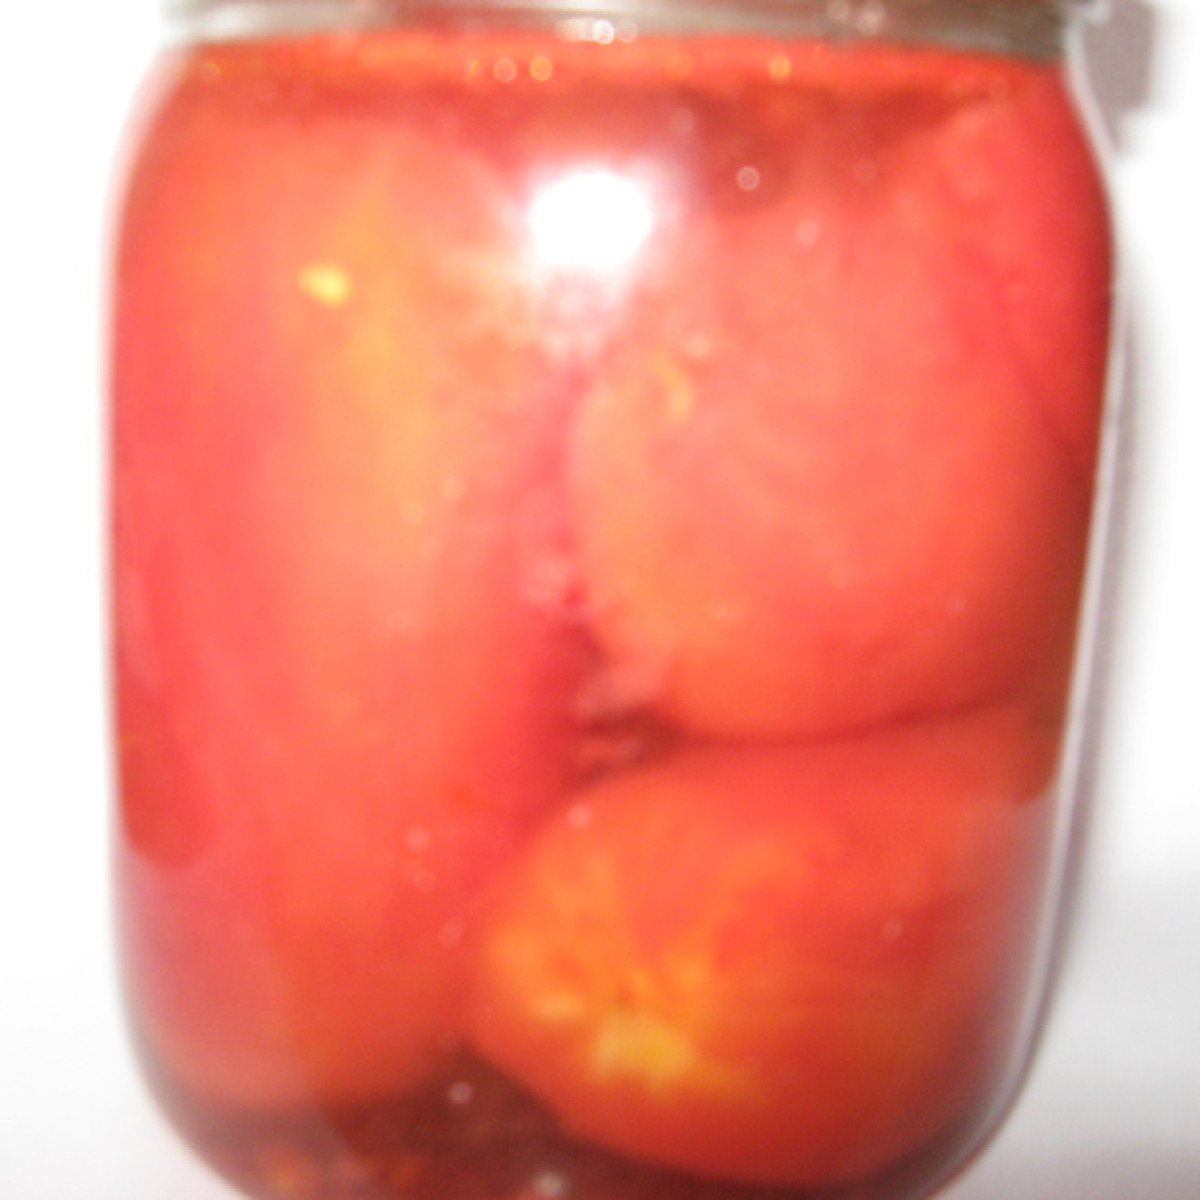 pomidory w calosci